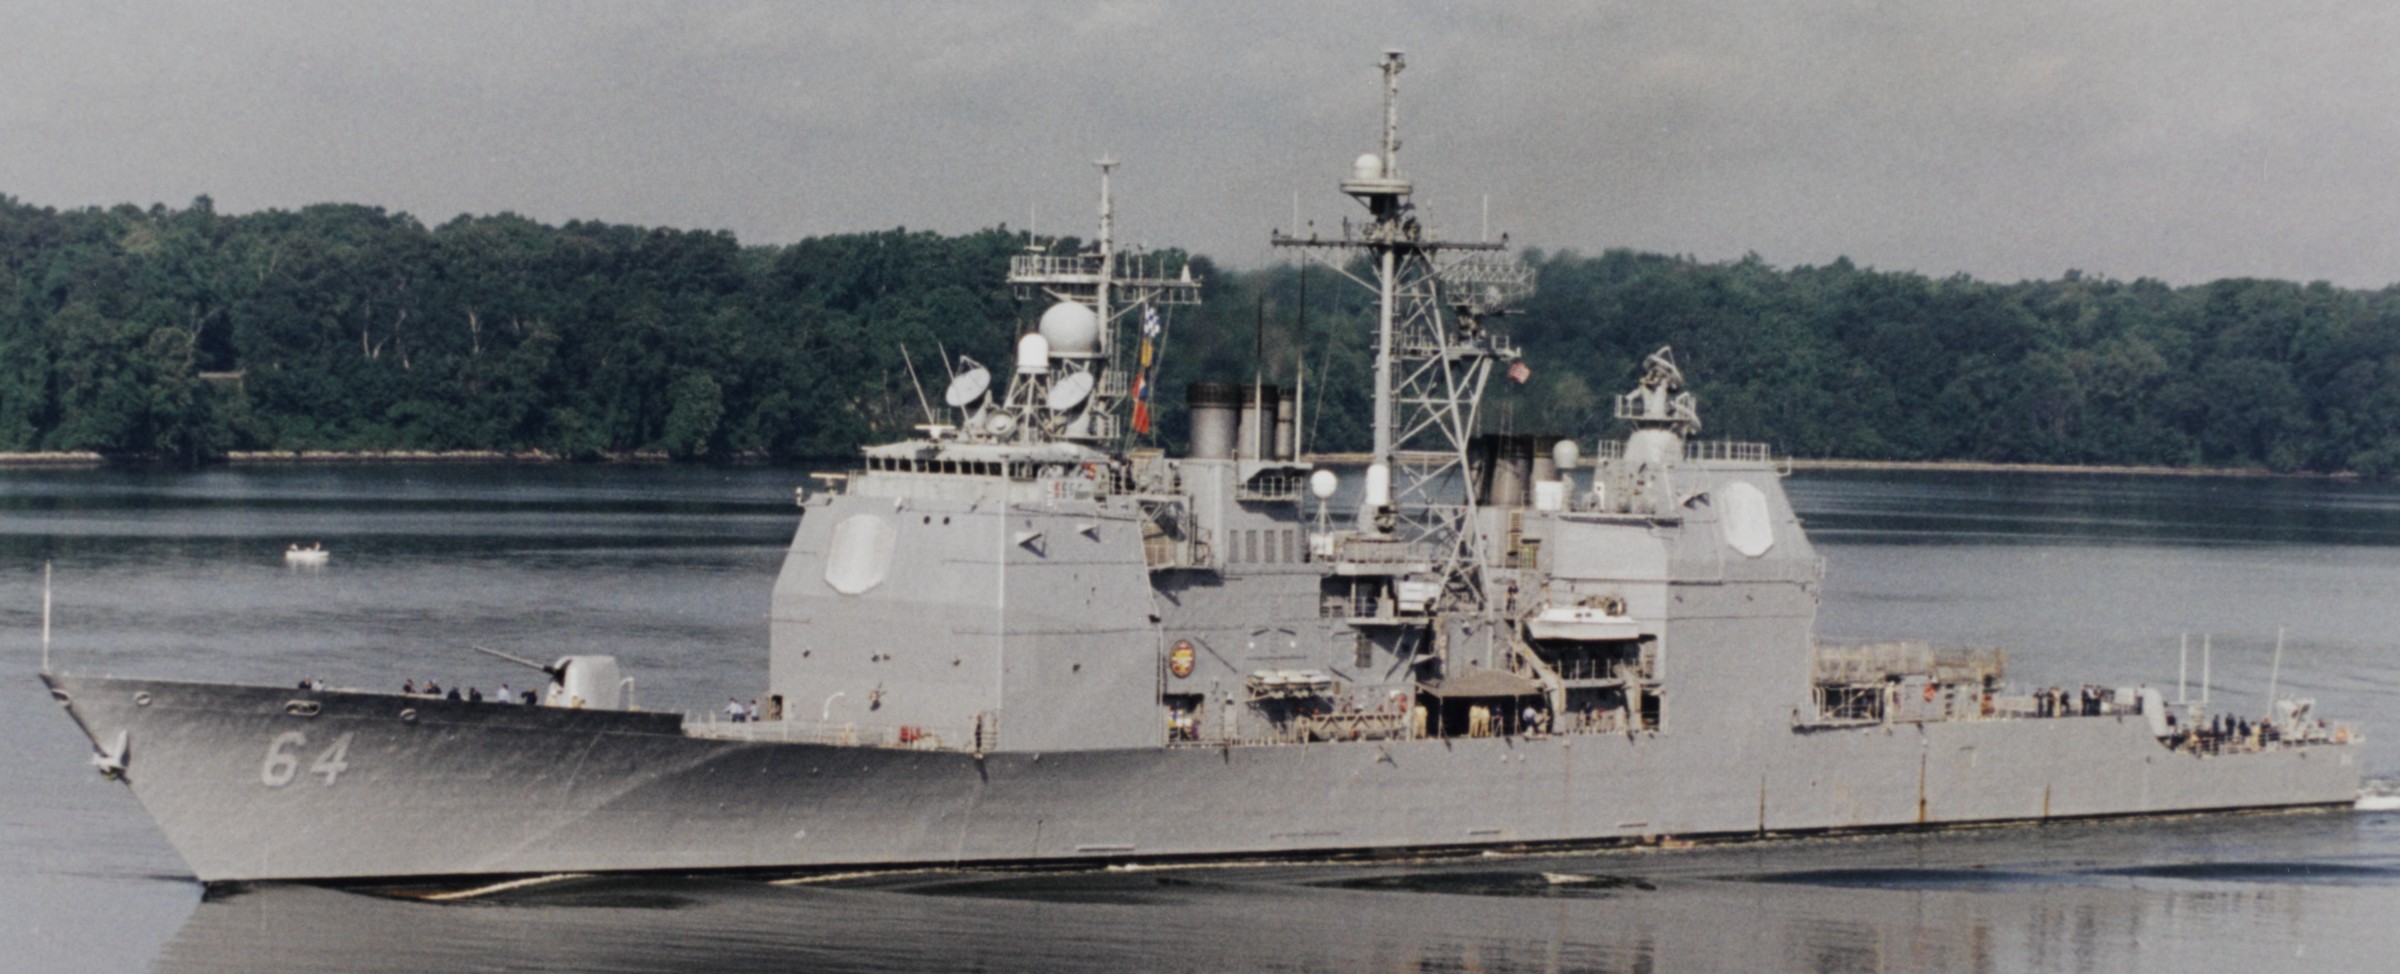 cg-64 uss gettysburg ticonderoga class guided missile cruiser aegis us navy 79